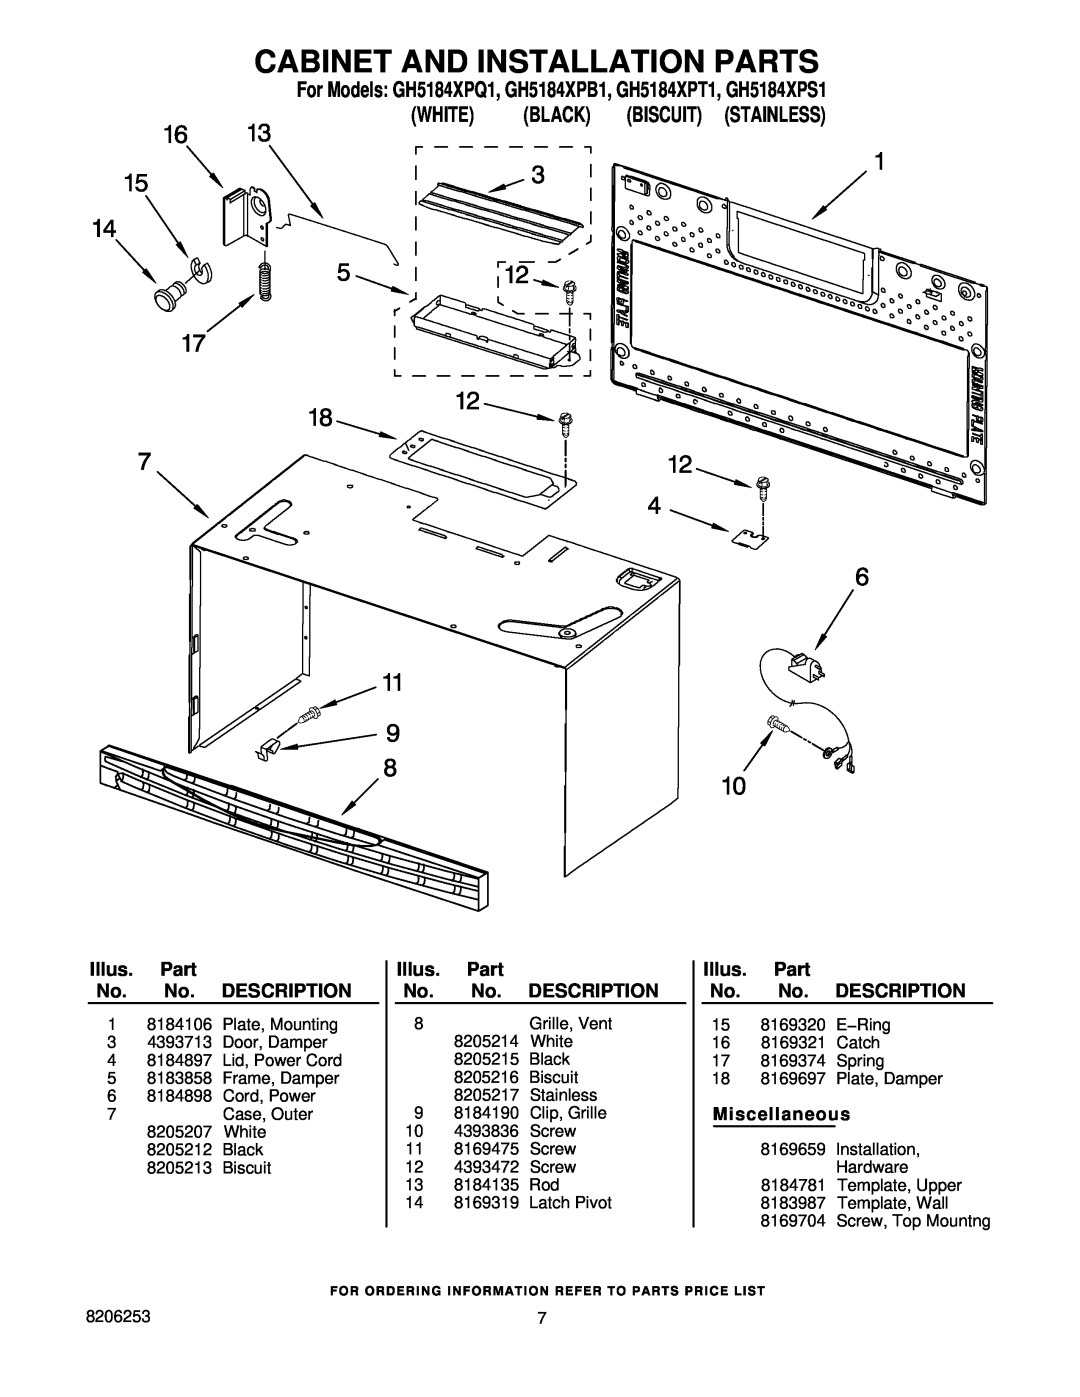 Whirlpool GH5184XPS1 manual Cabinet And Installation Parts, Miscellaneous, White, Black, Illus. Part No. No. DESCRIPTION 